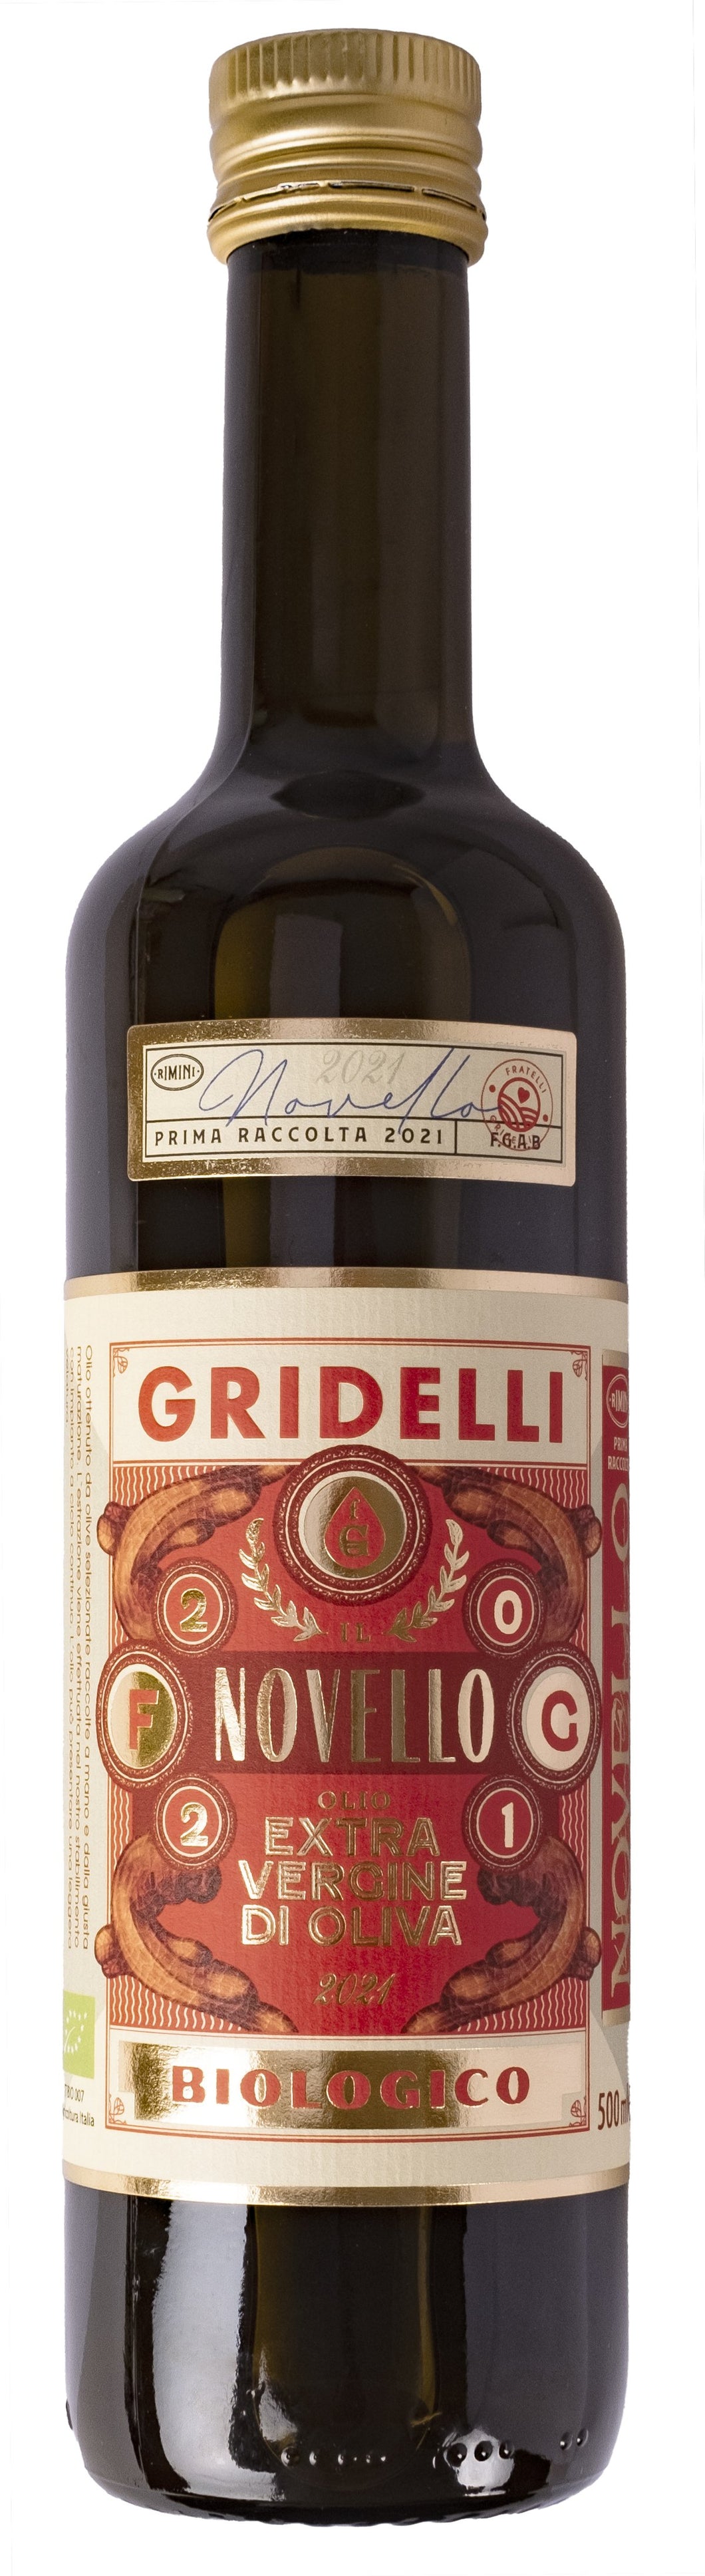 Gridelli's Olivolja Il Novello 2021